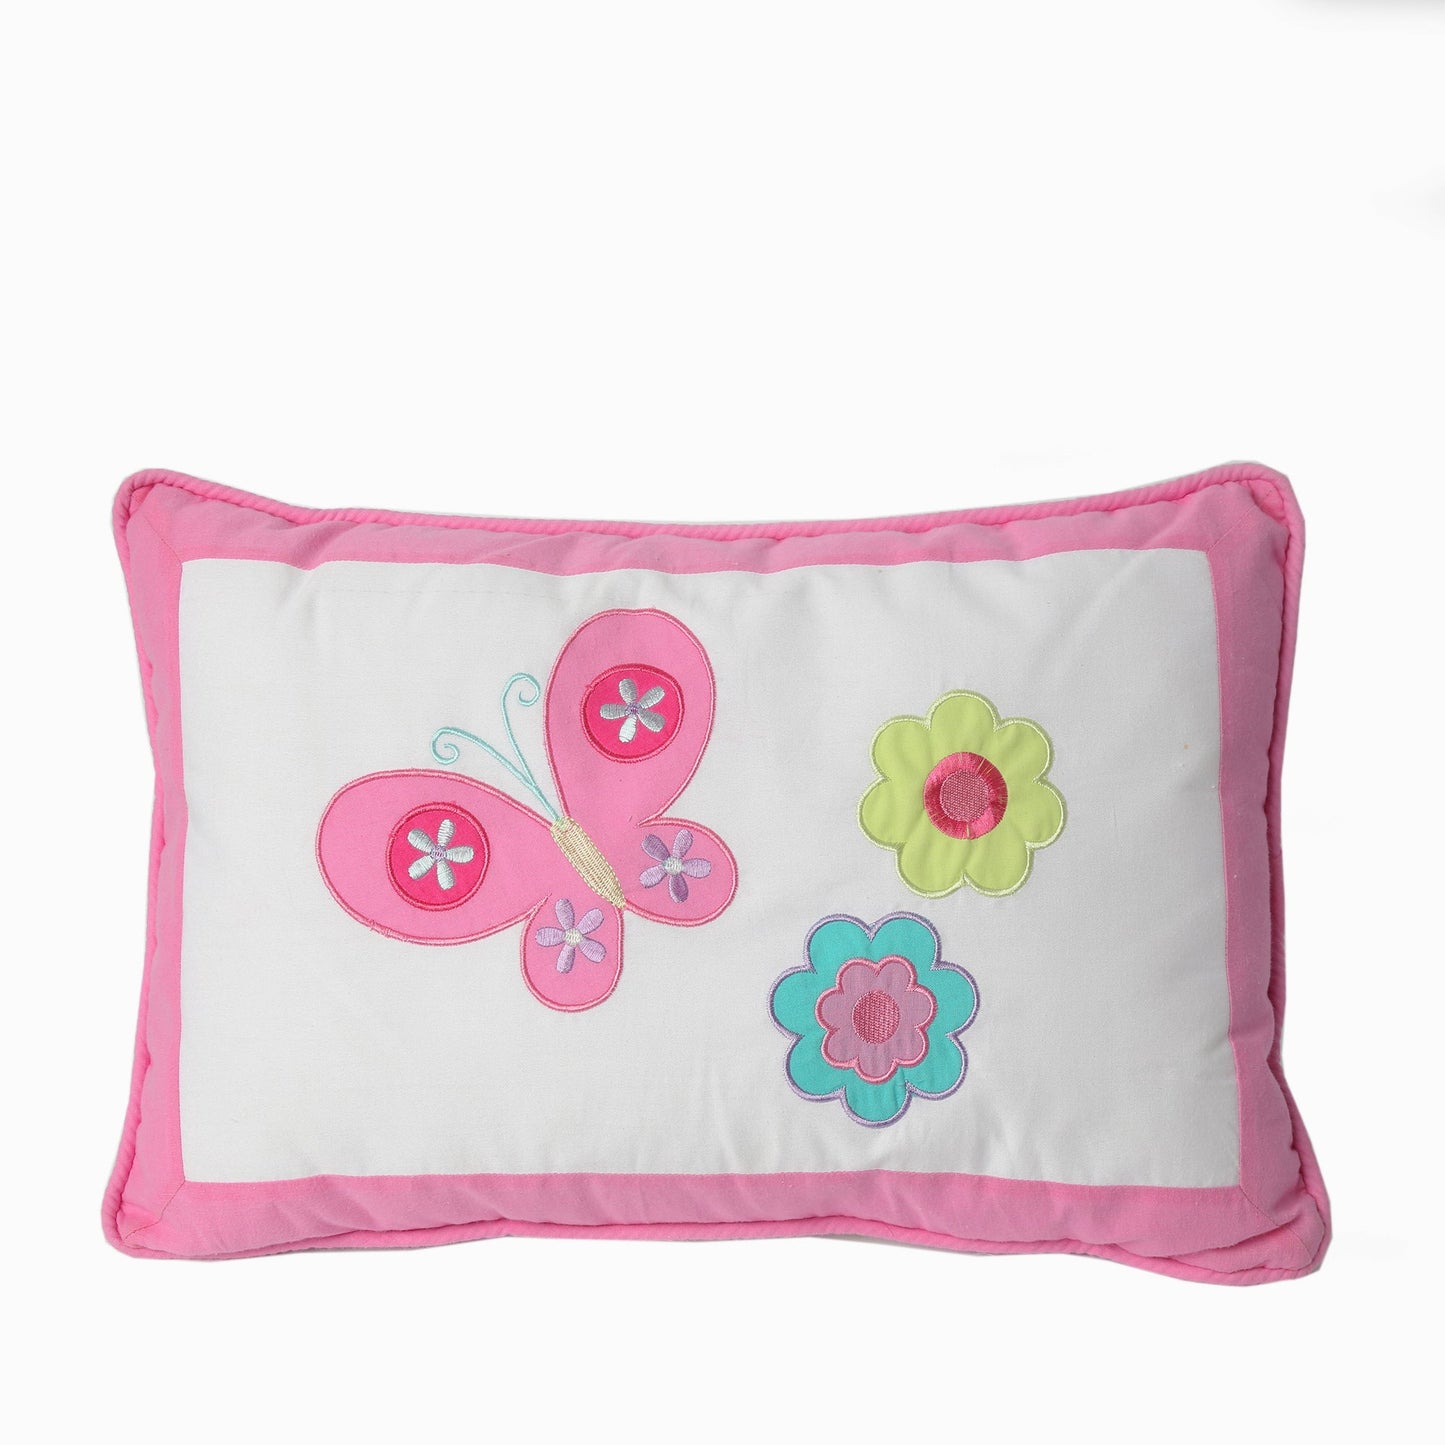 Butterfly Flower Pink Rectangular Embroidered Decor Throw Pillow